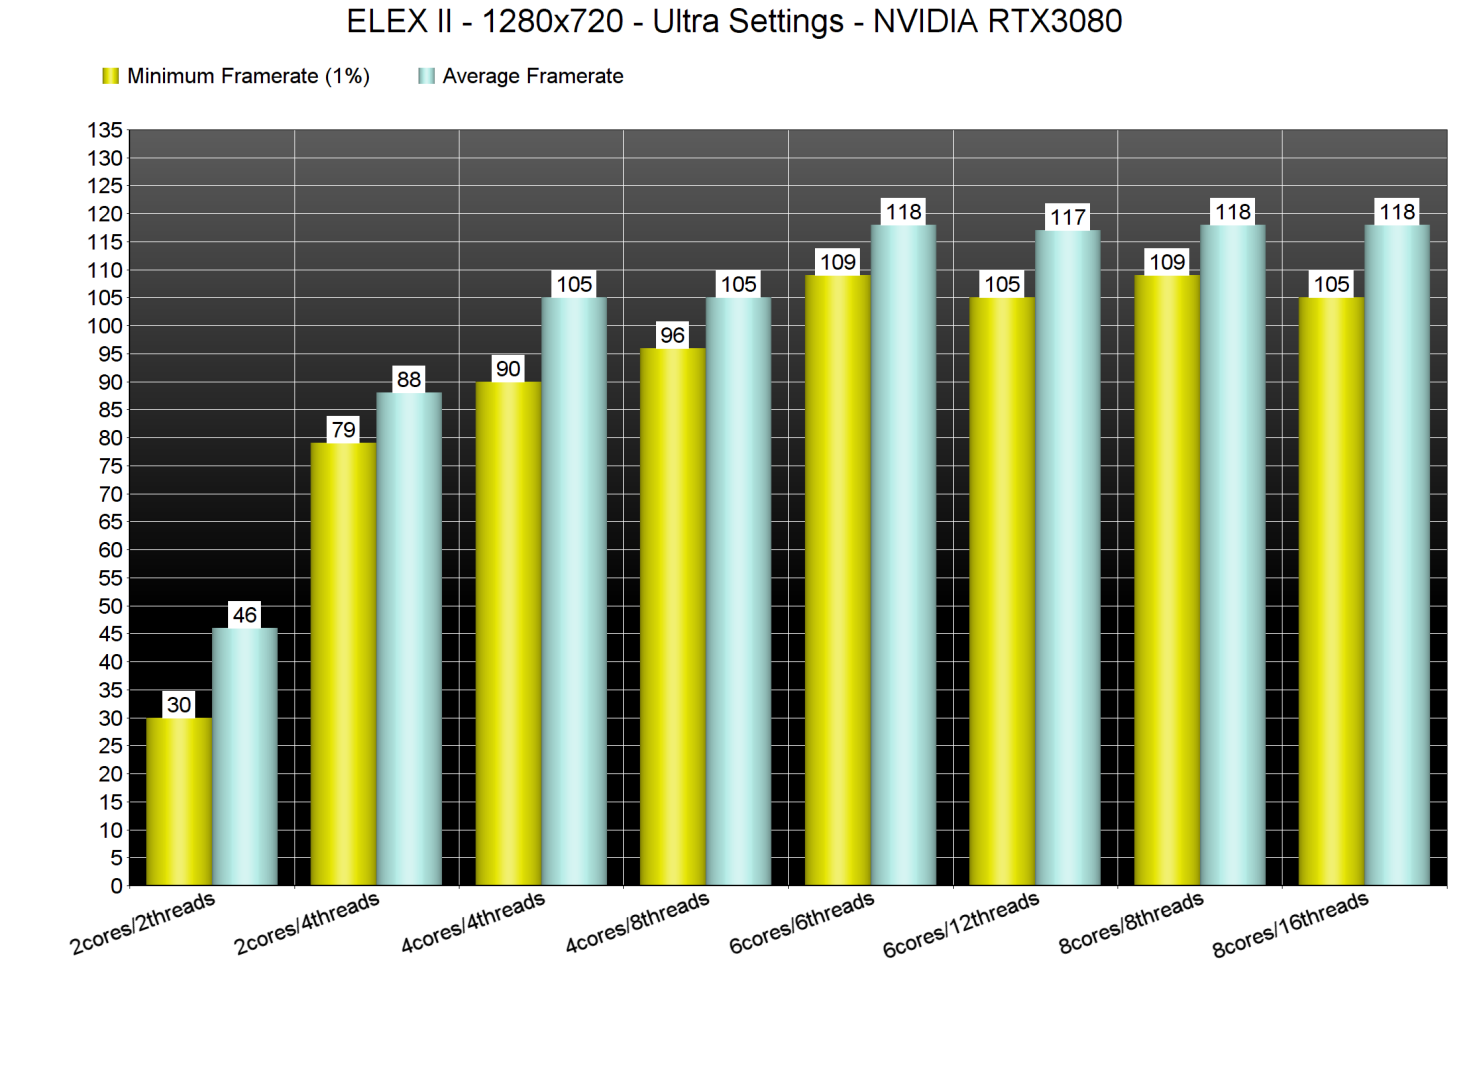 ELEX II CPU benchmarks